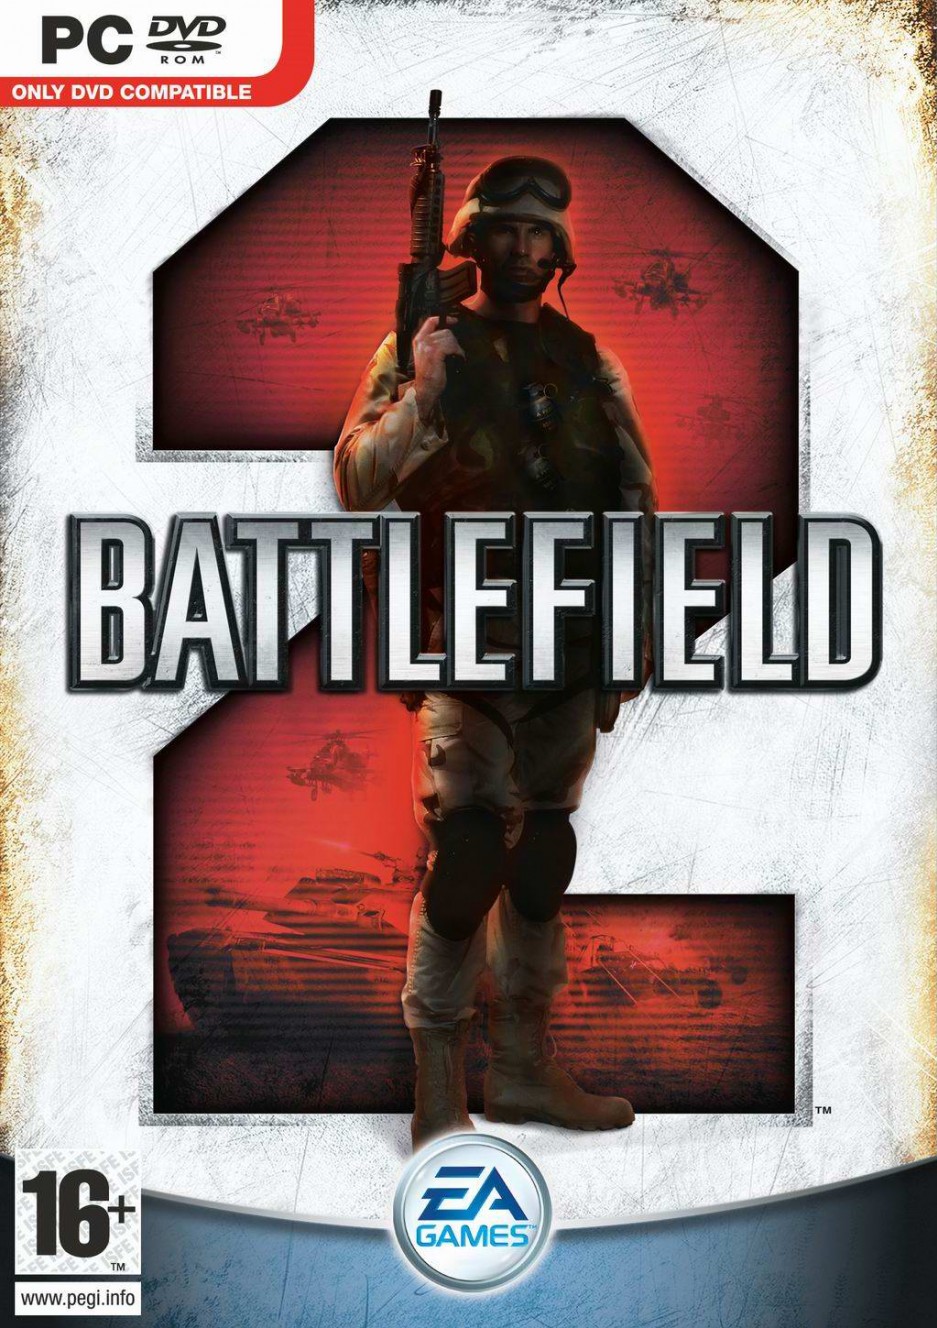 battlefield 1943 pc download full free